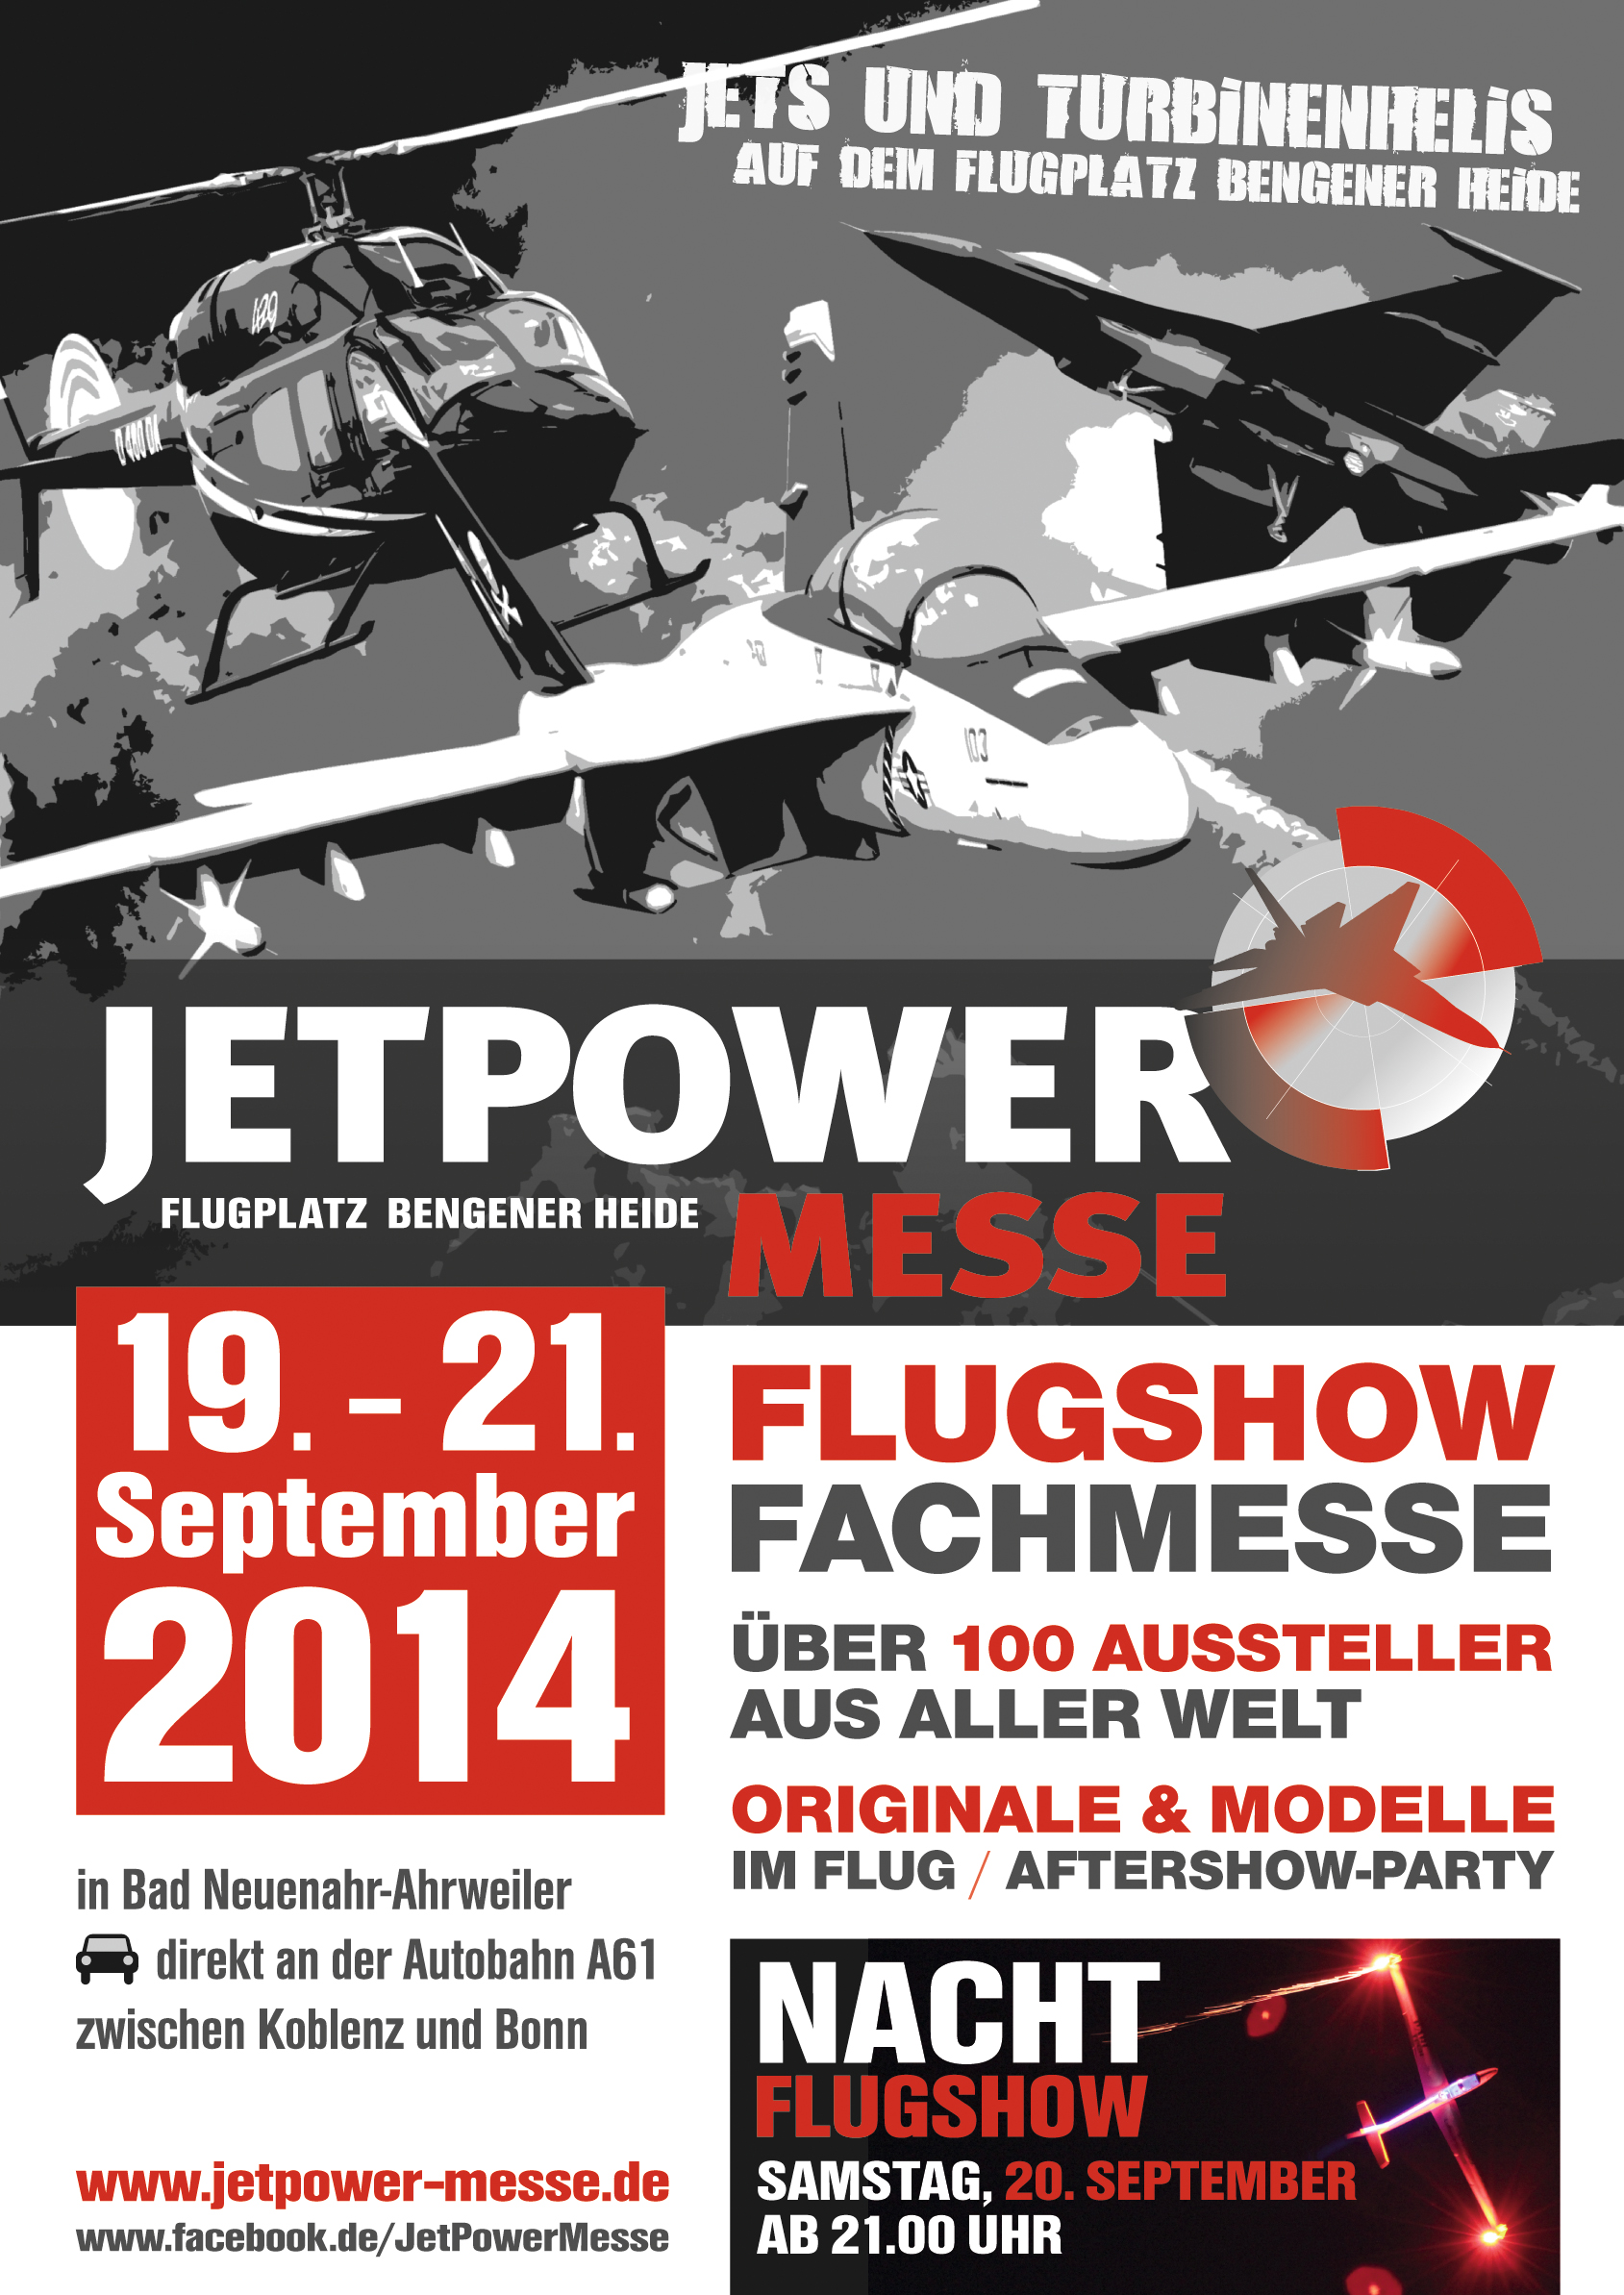 Jetpower Messe 2014